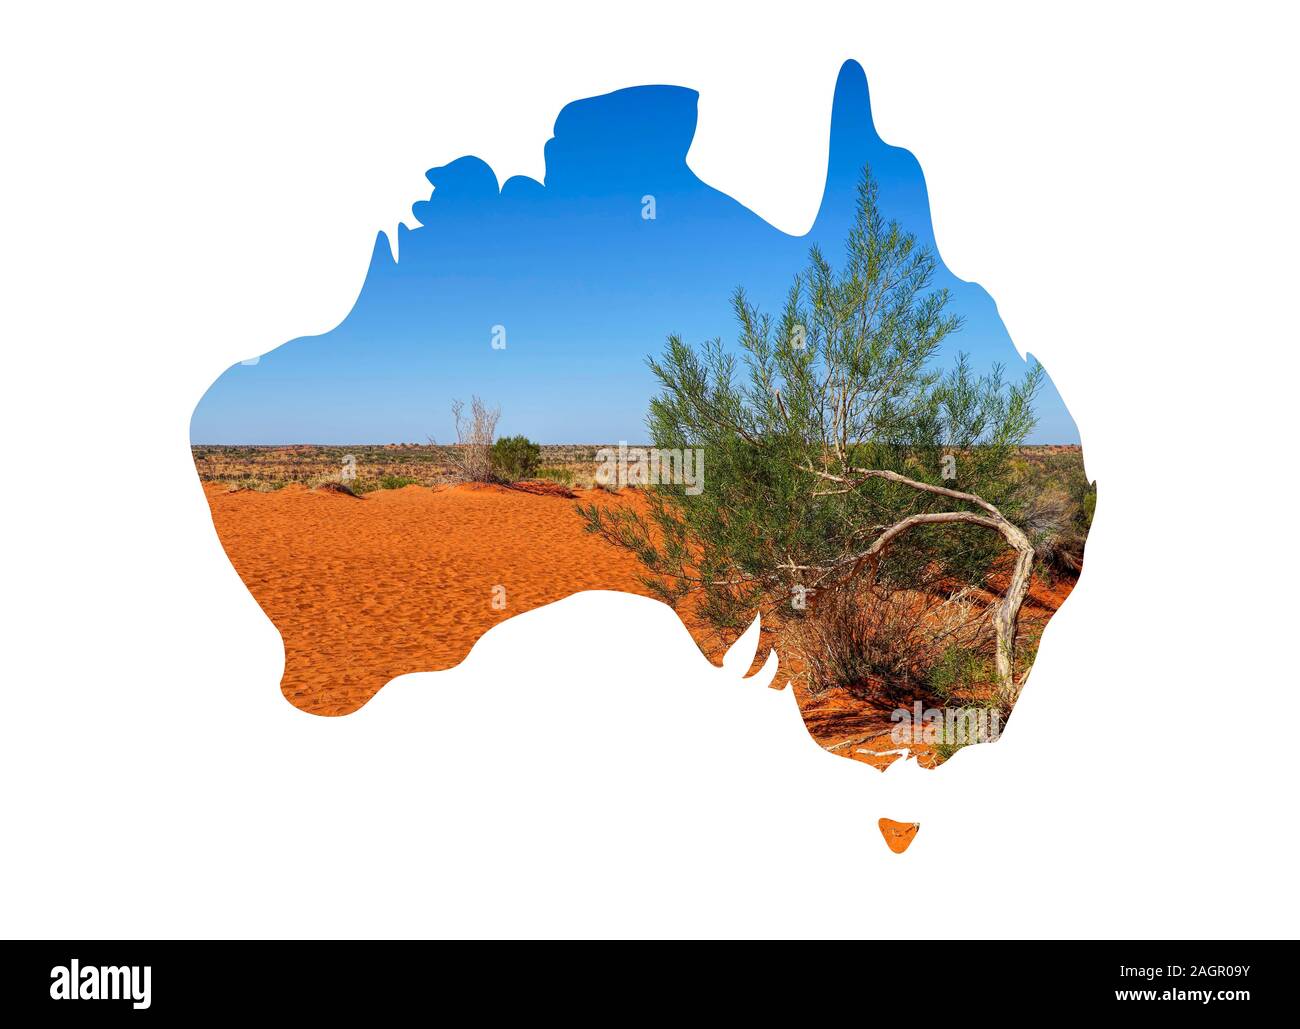 Australian map with Australian outback scene inserted Stock Photo - Alamy